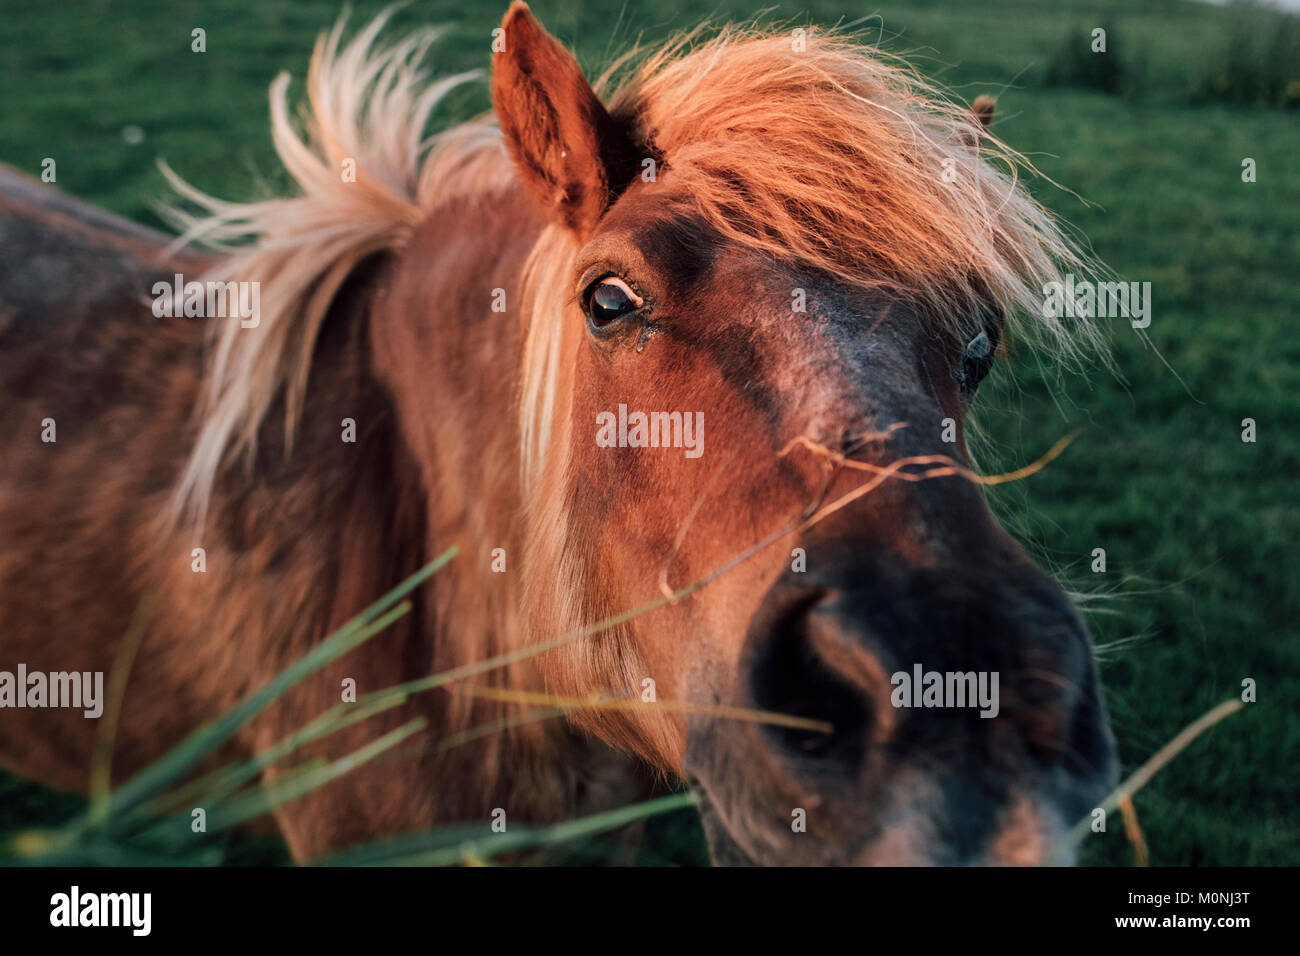 France, Seine-Maritime, portrait of brown horse Stock Photo